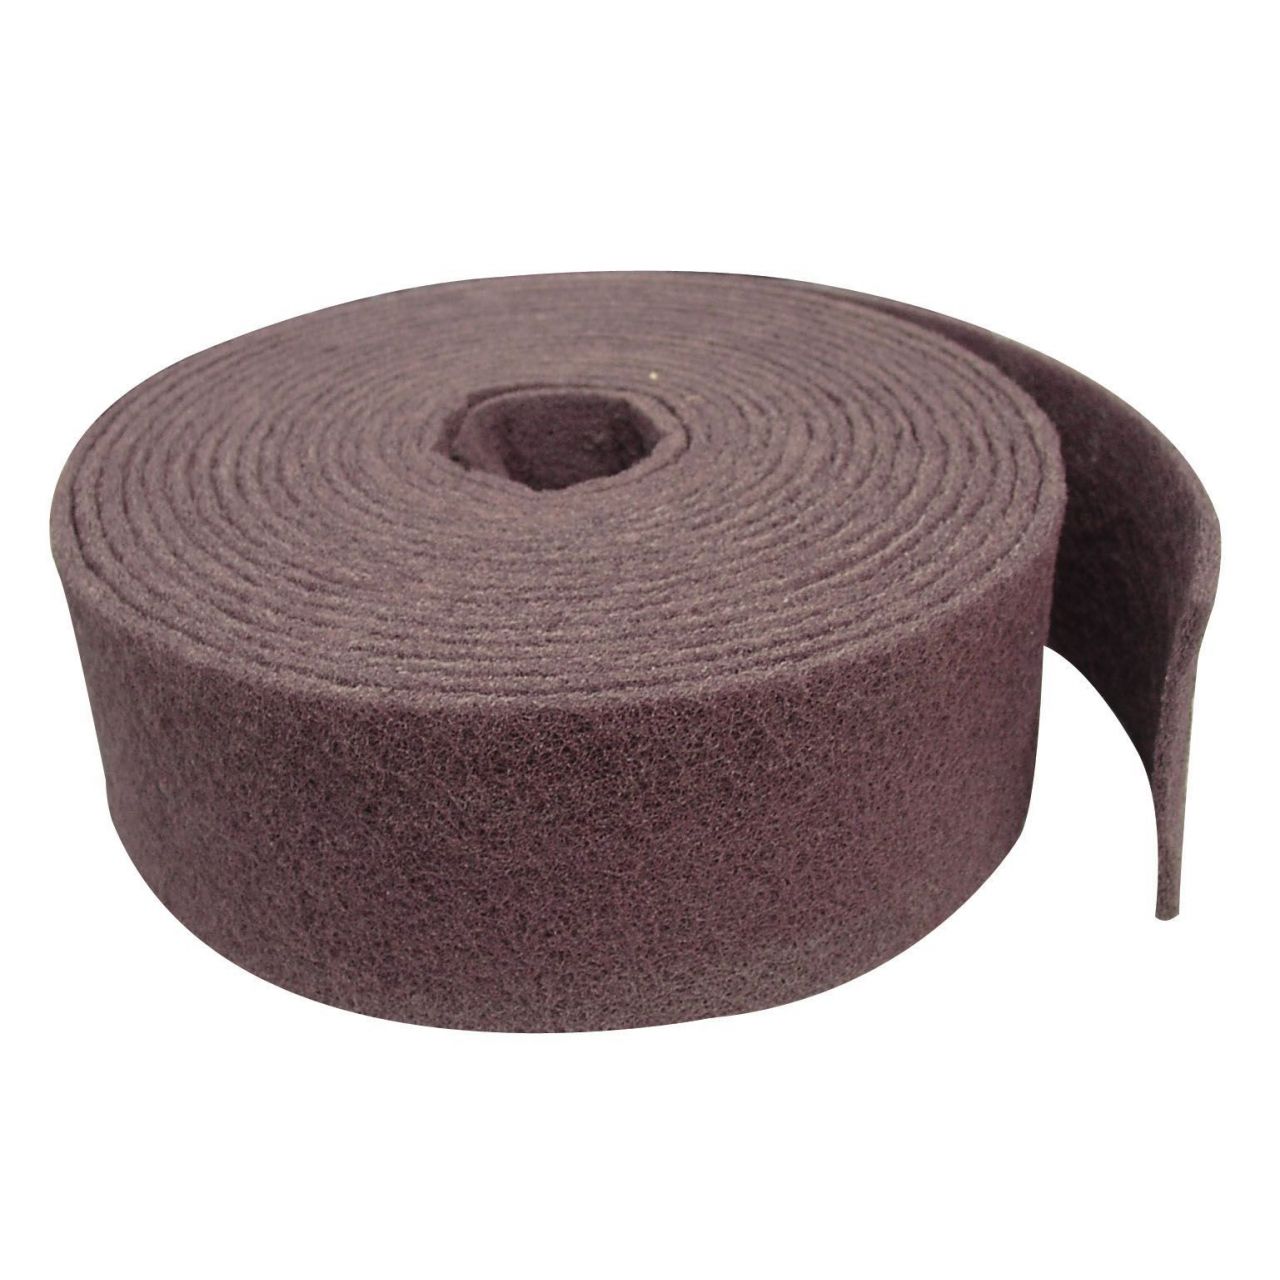 Rollos fibra abrasiva sin tejer calidad profesional (Ancho 250 mm; Largo 10.000 mm; Grano VF-280/320)